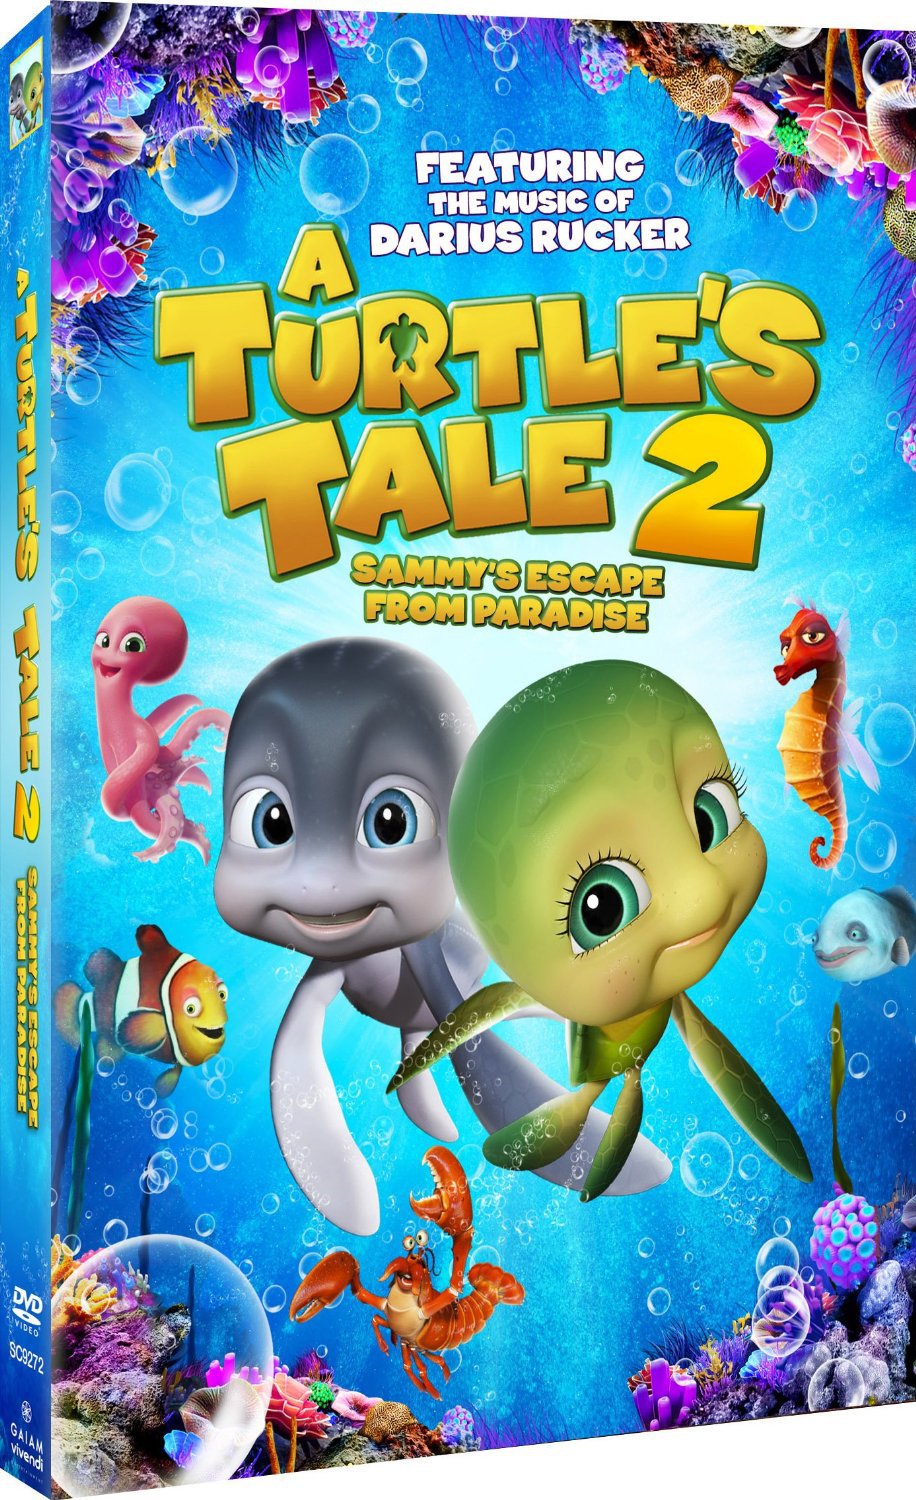 Turtles Tale 2, A